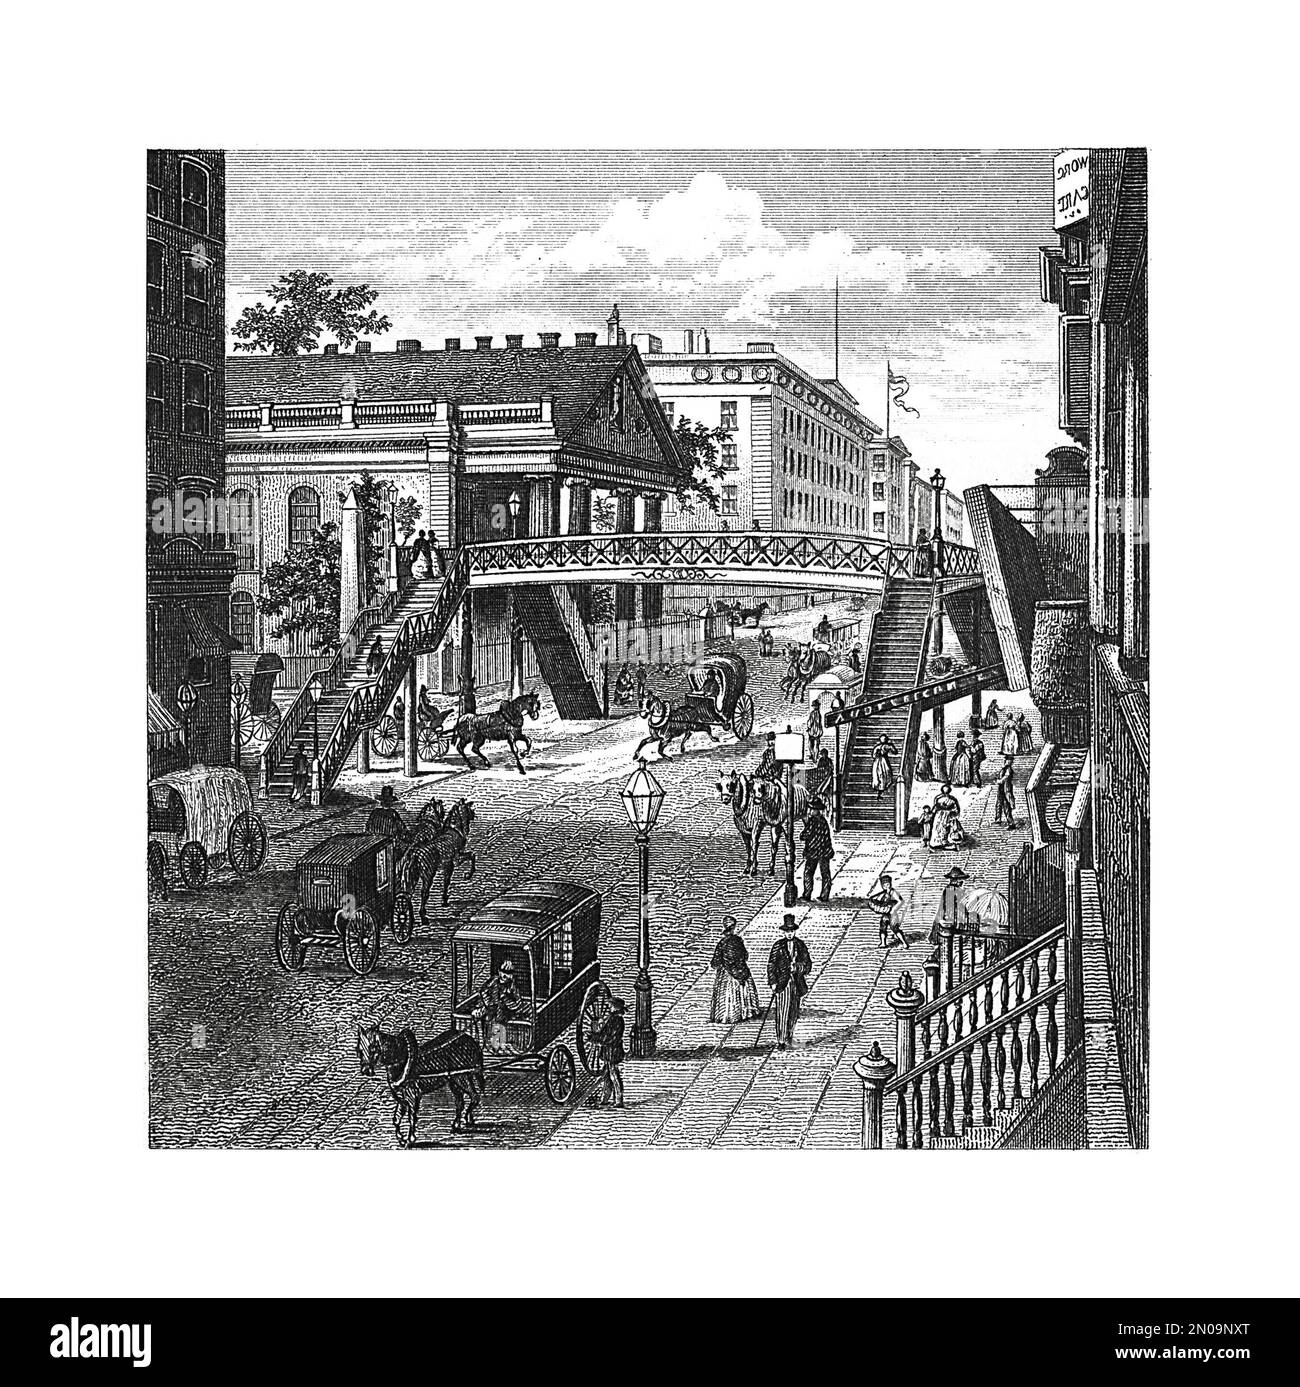 Antique engraving depicting street in New York in XVIII century. Illustration published in Systematischer Bilder Atlas - Bauwesen, Ikonographische Enc Stock Photo